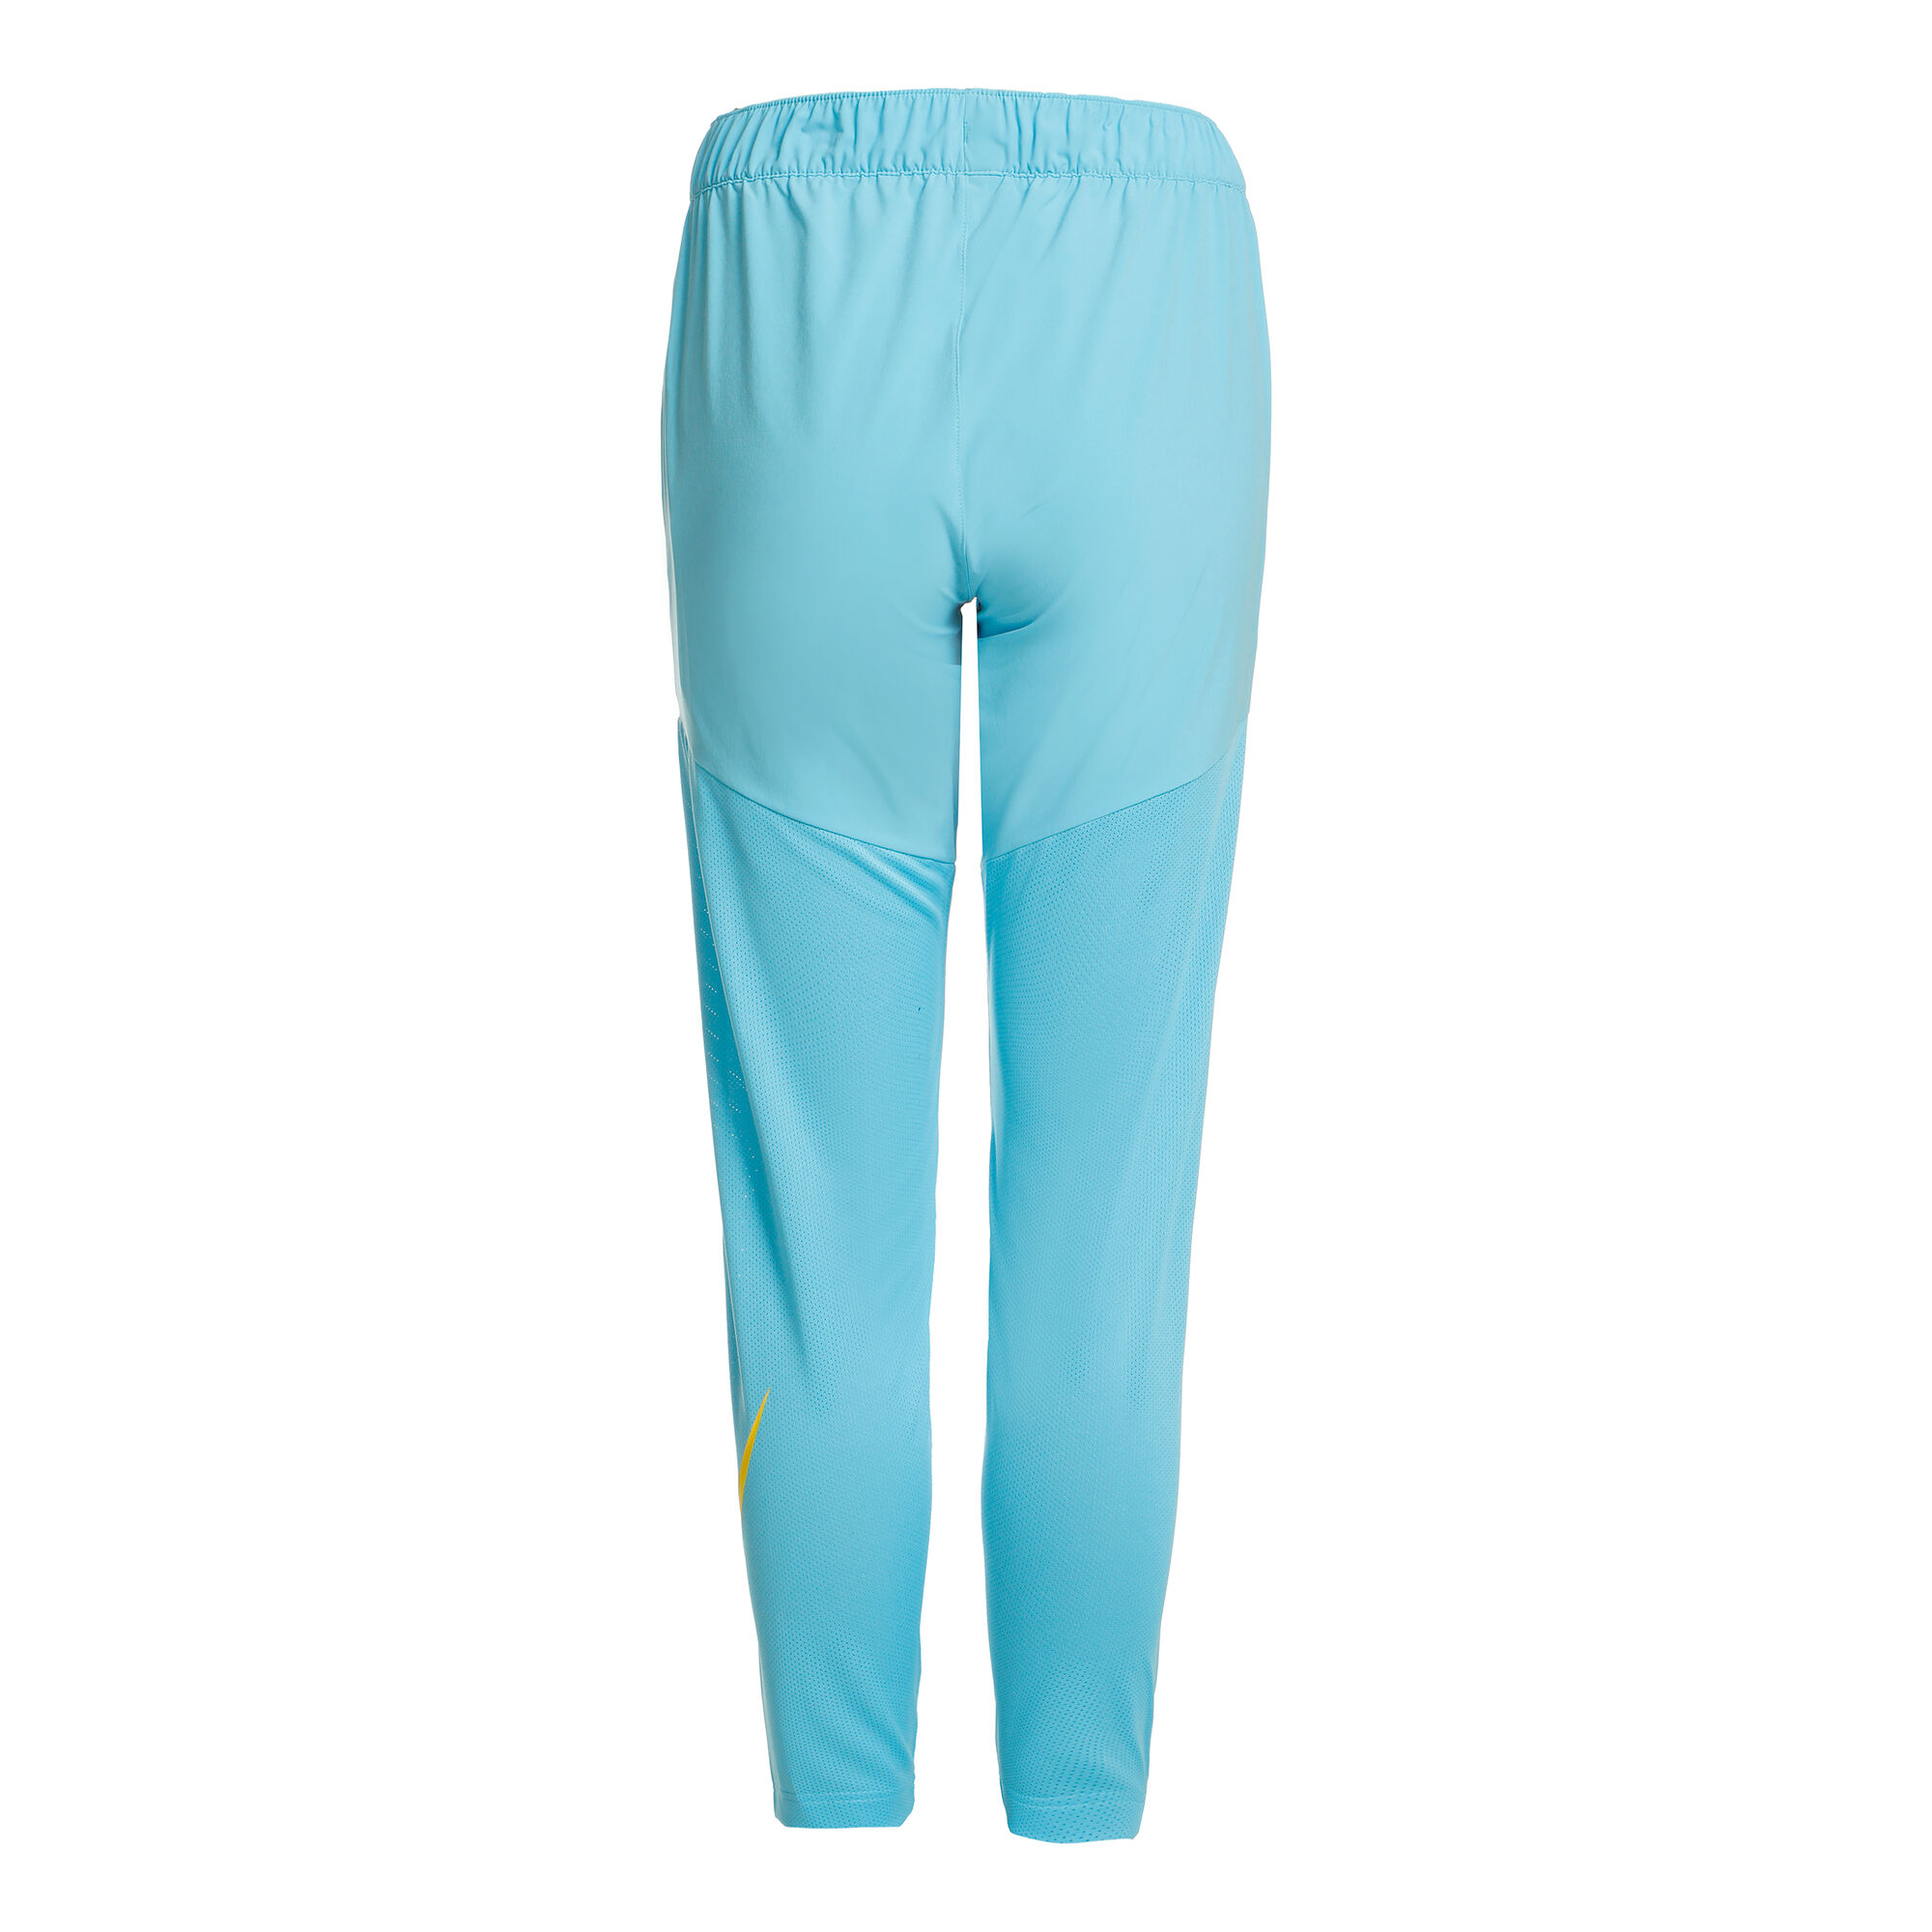 Buy Nike Dri-Fit Swoosh Running Pants Women Blue, Grey online